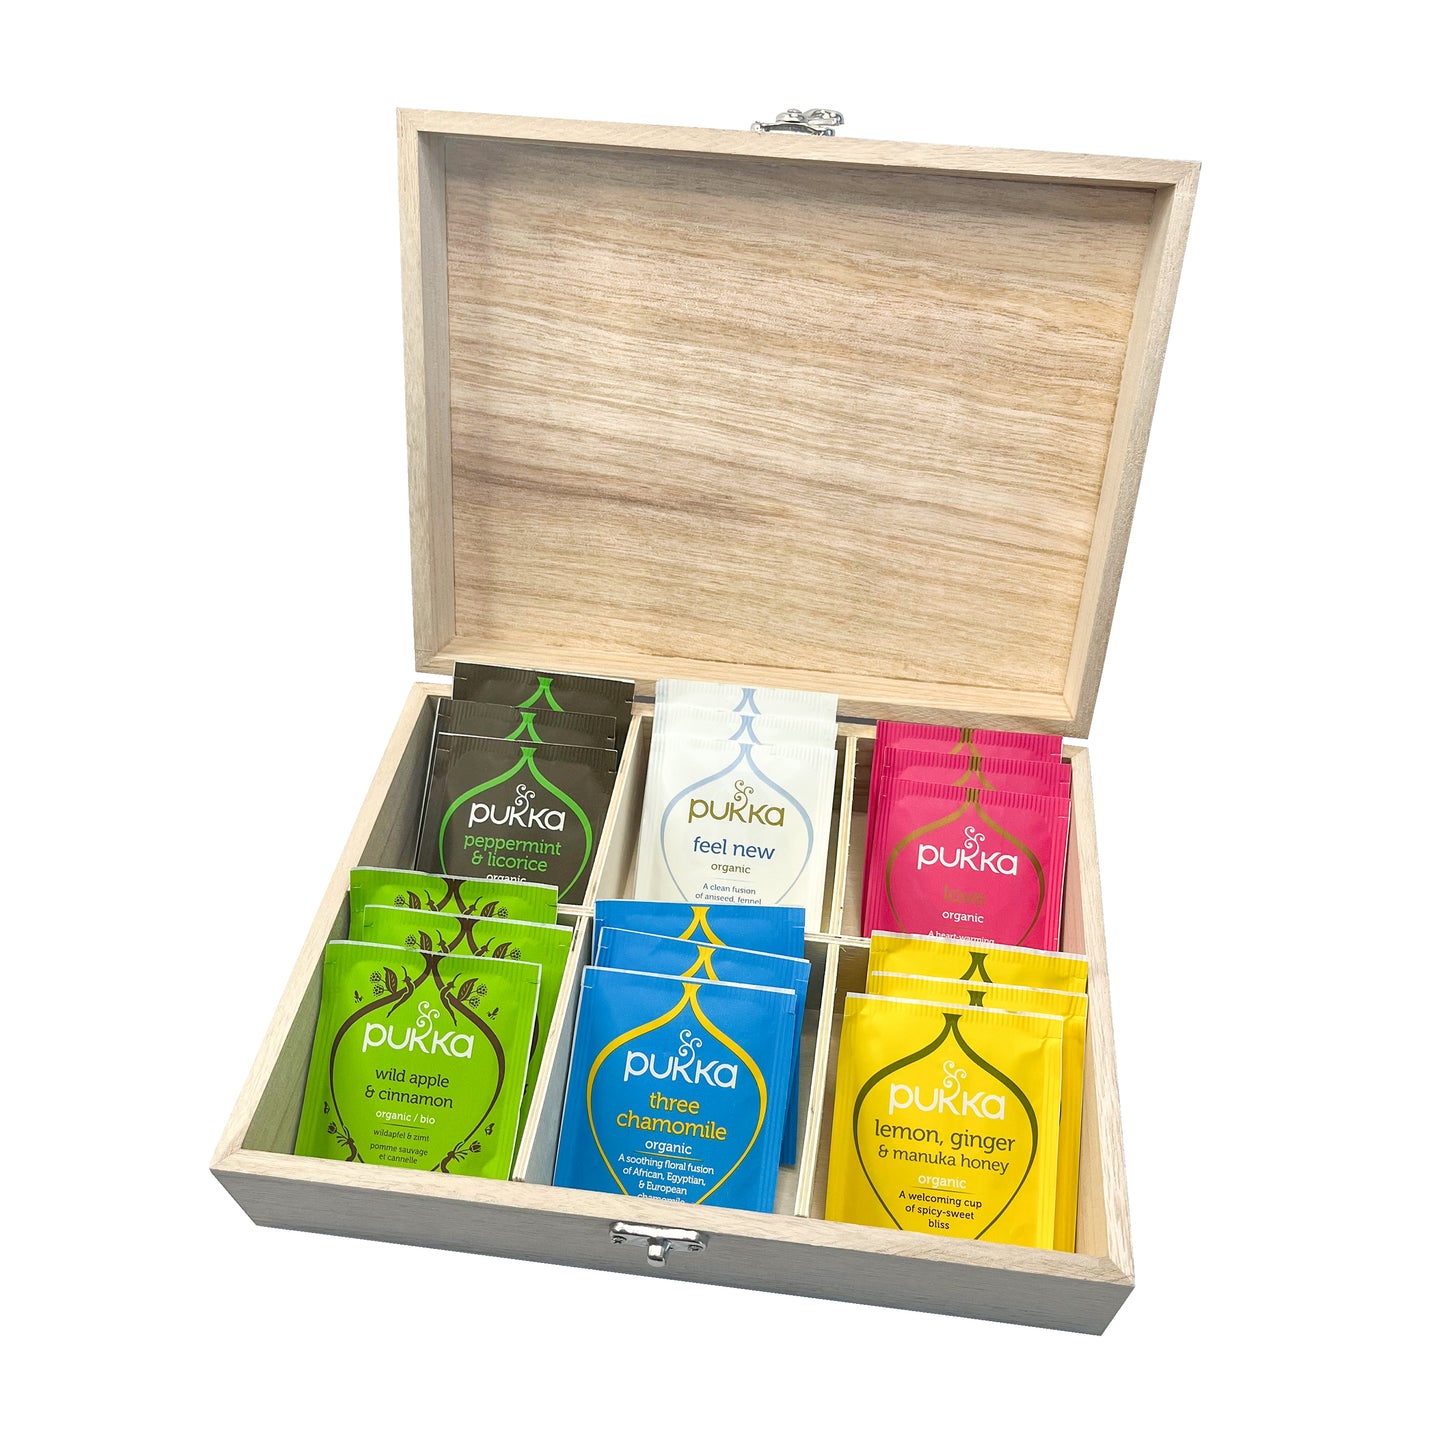 Personalised Gentlemen's Teas Wooden Tea Box